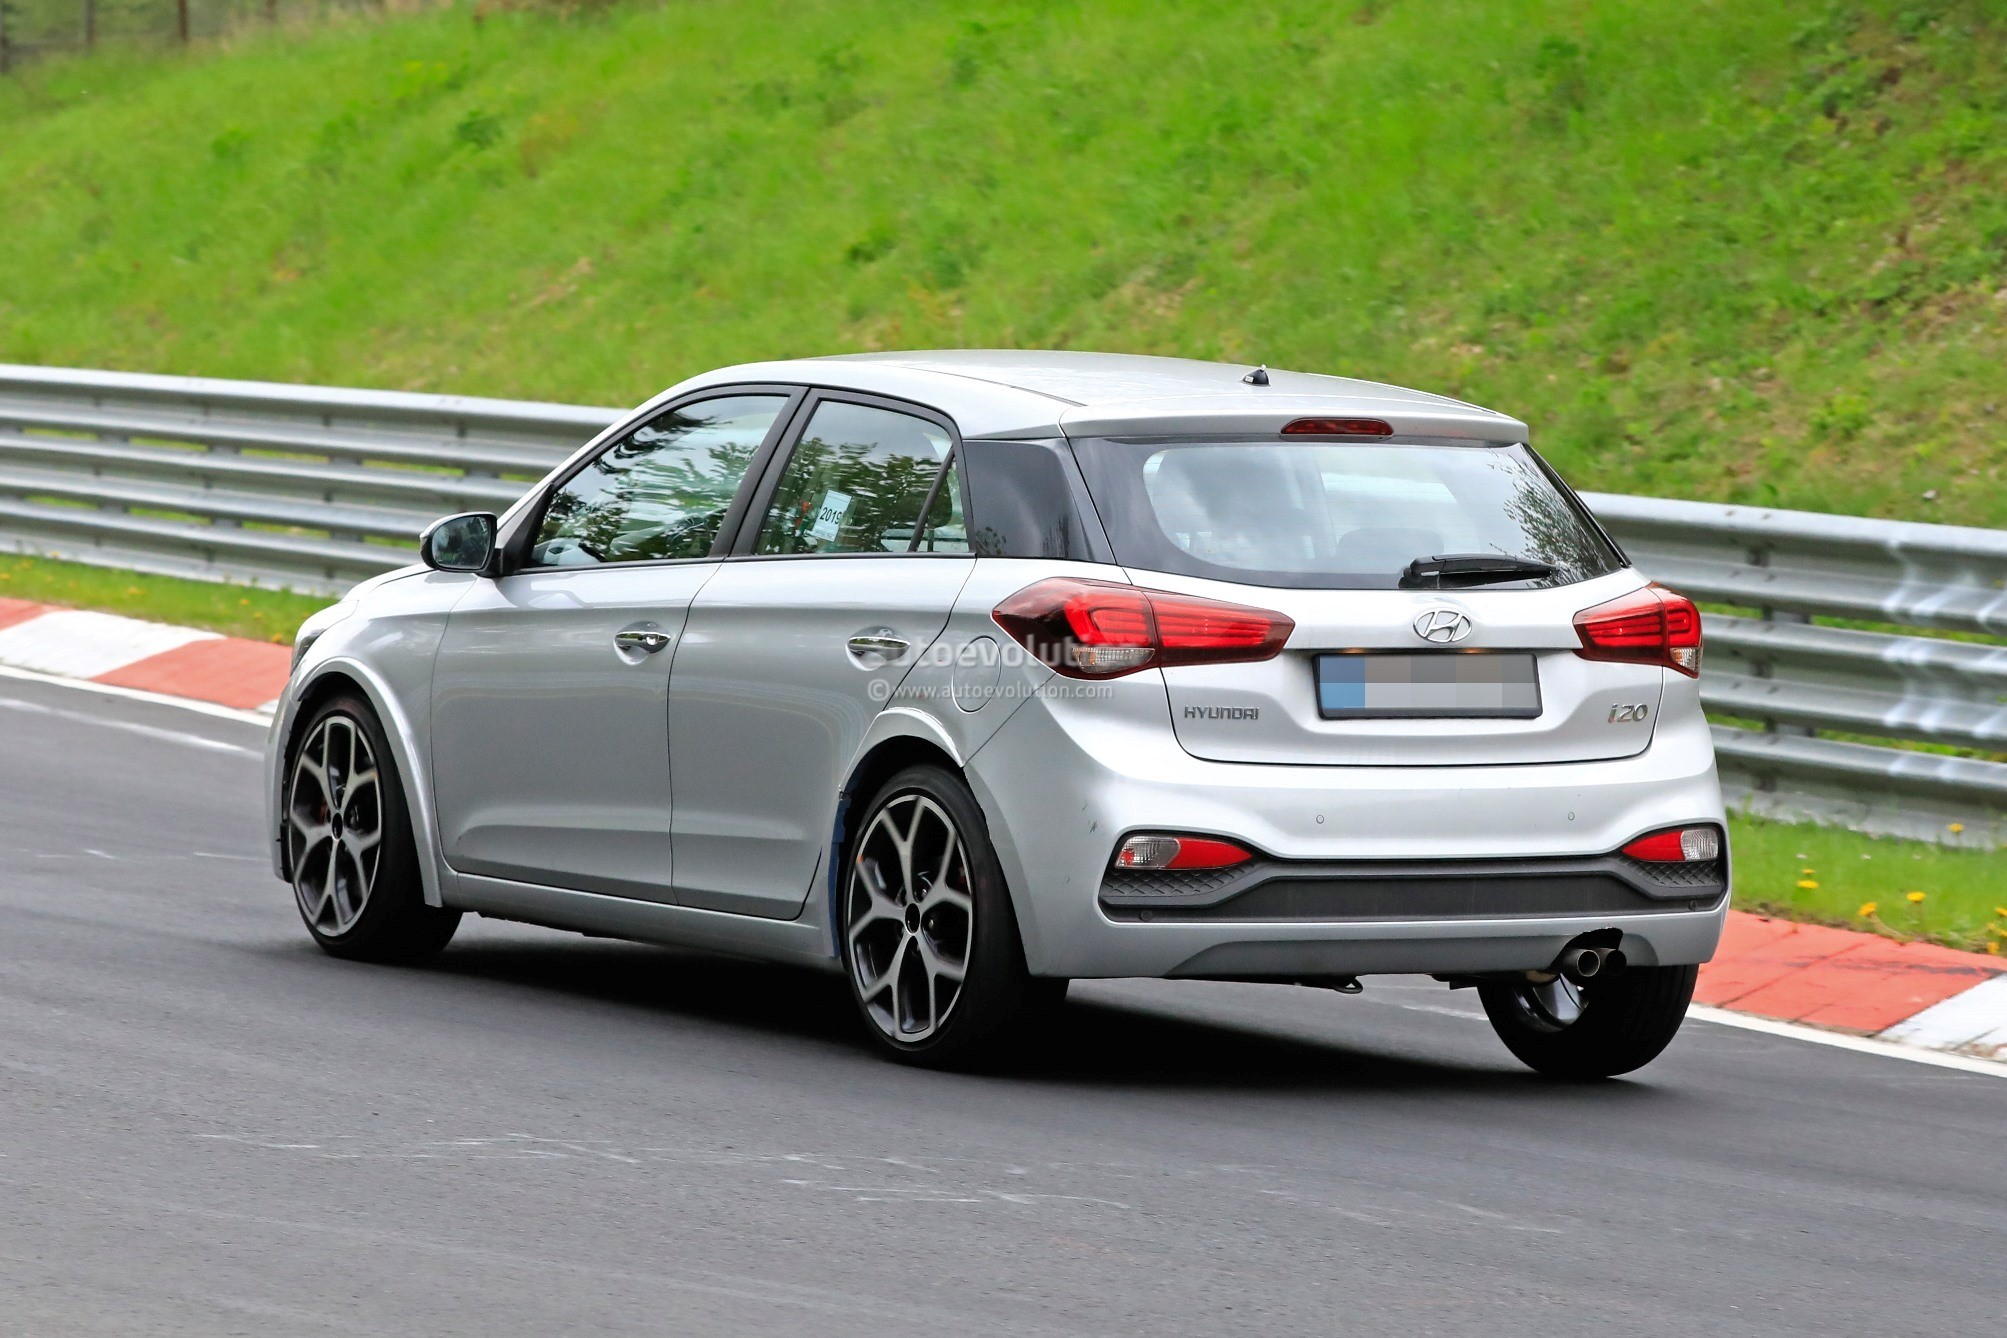 2020 Hyundai i20 N Spied Testing At the Nurburgring - autoevolution